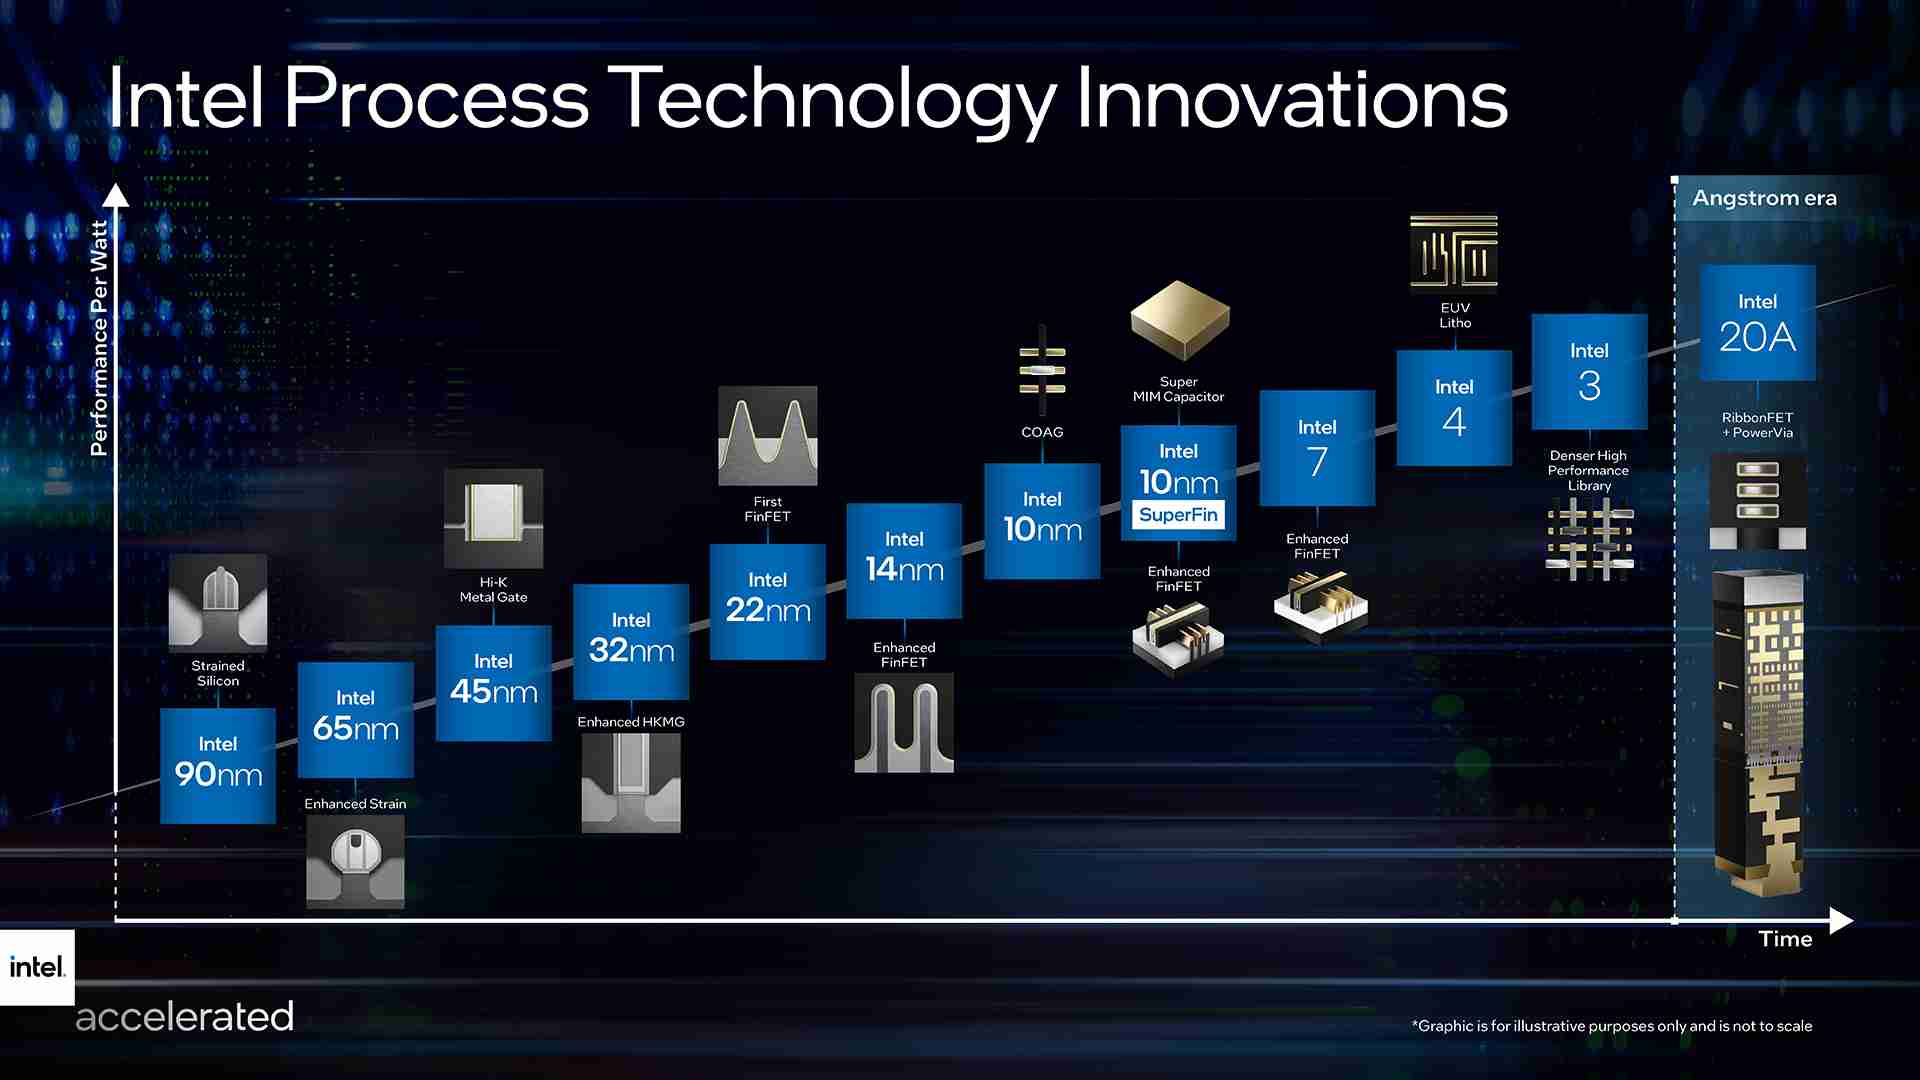 Intel Process Technology Innovations. Credit - Intel